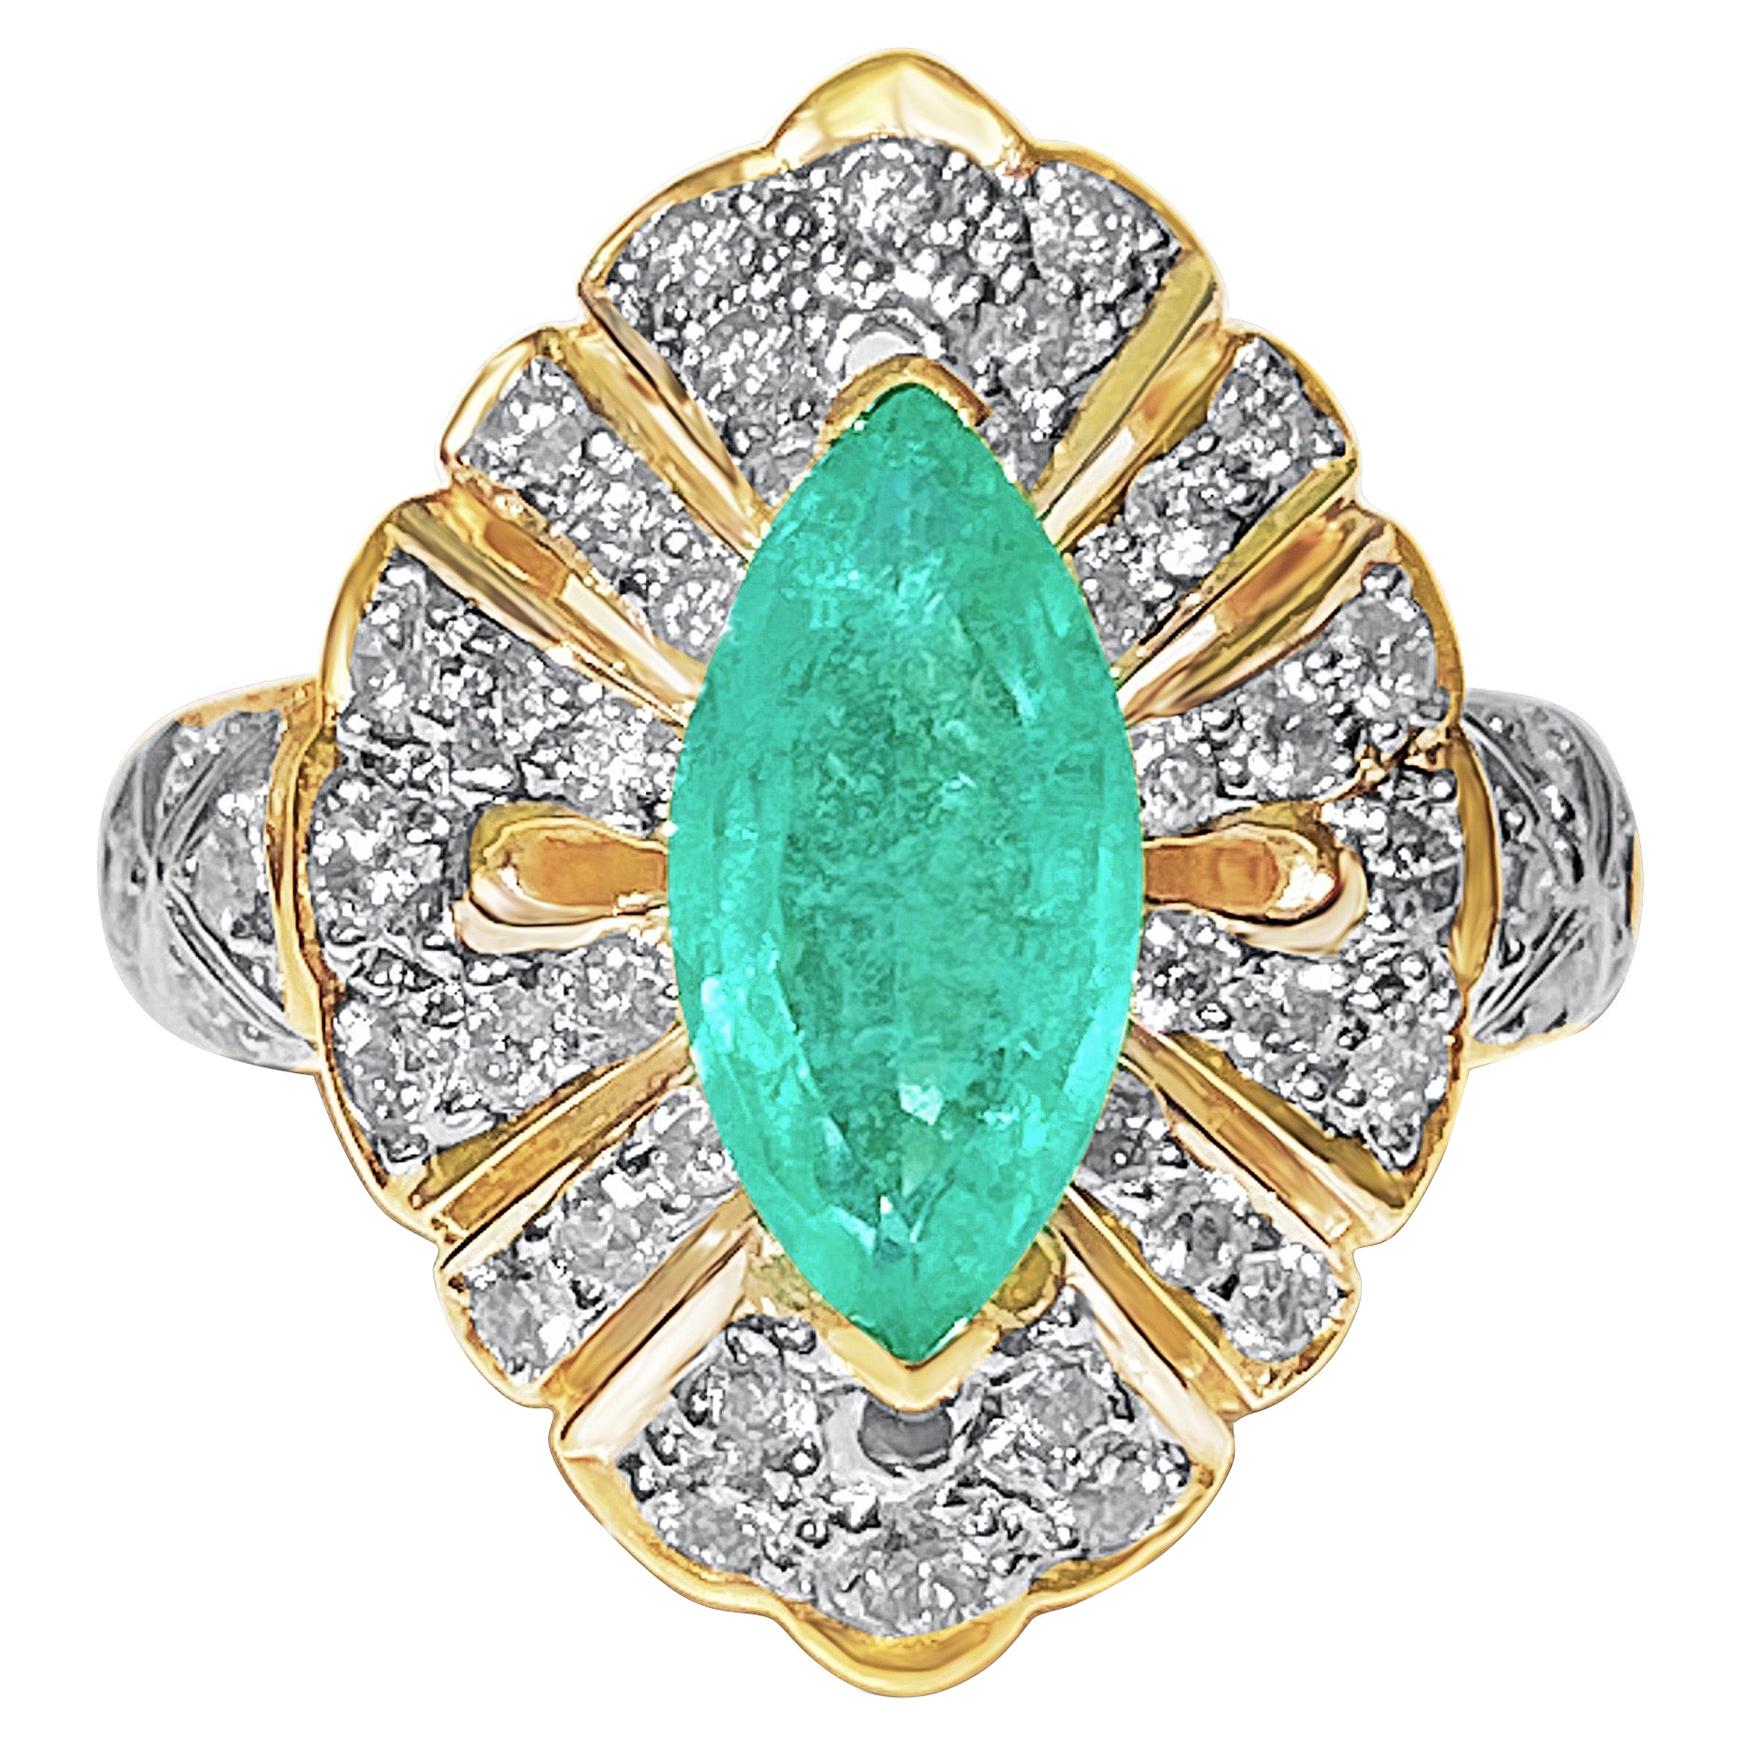 1.50 Carat Marquis Cut Colombian Emerald, Diamond and 14 Karat Yellow Gold Ring